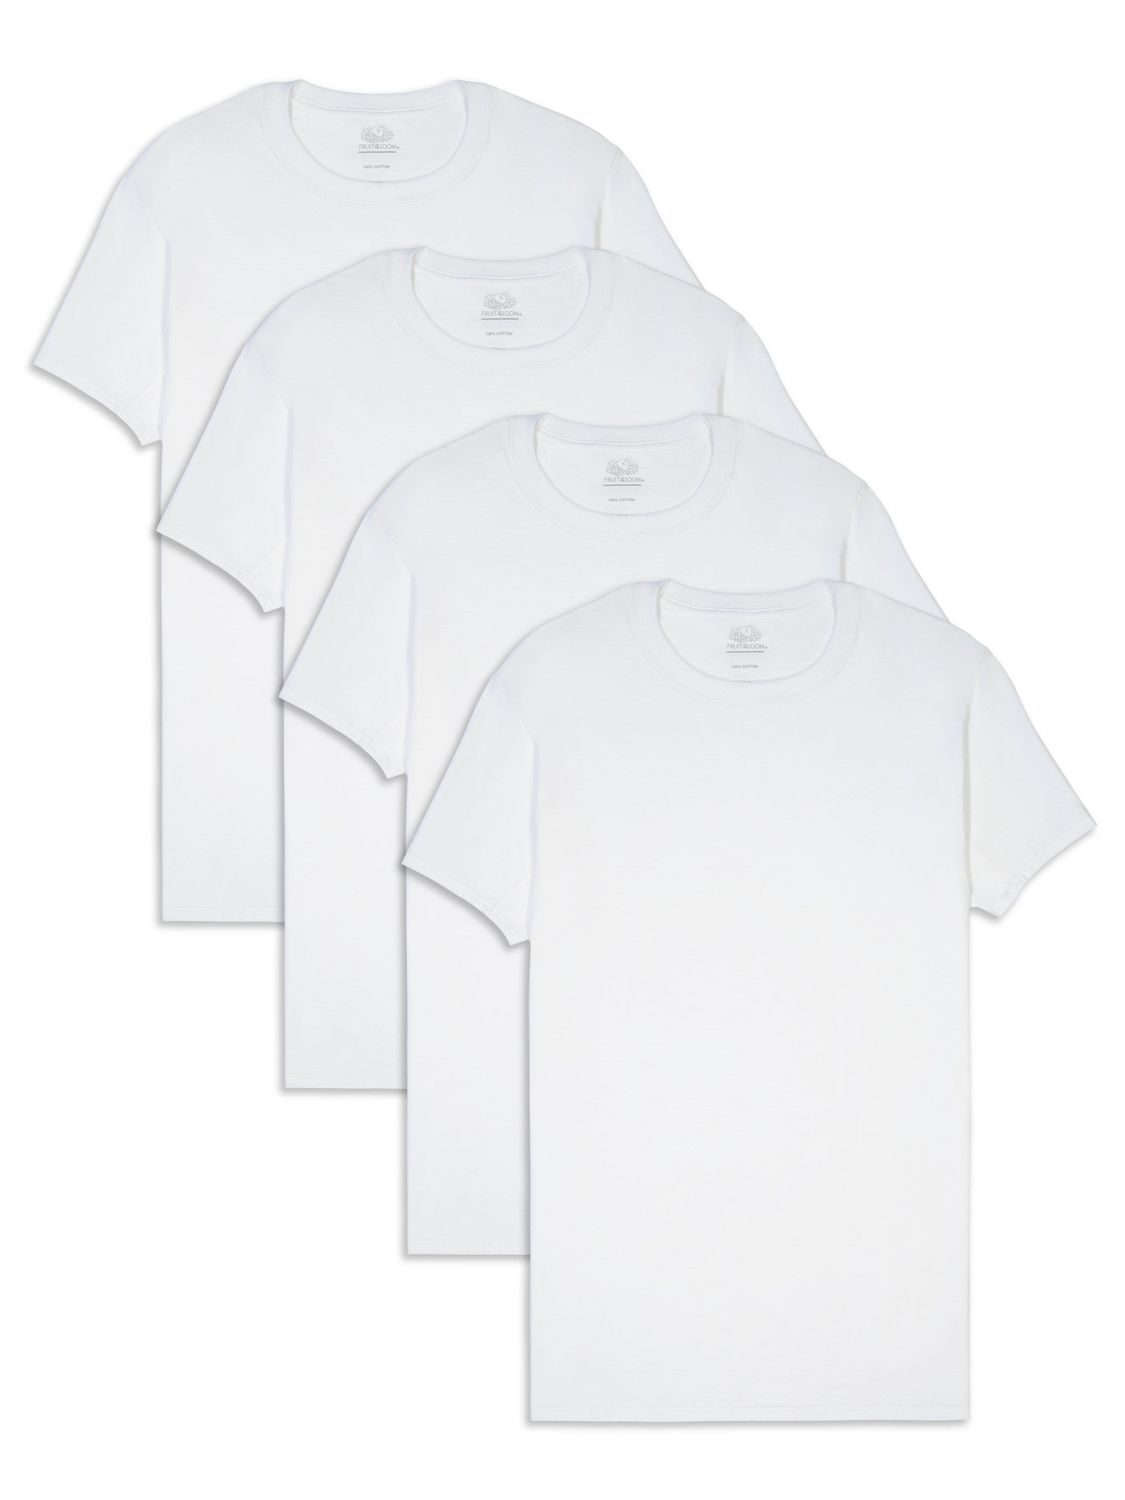 Fruit of the Loom Men's Coolzone White Crew neck T-shirt, 4-Pack - Walmart .ca